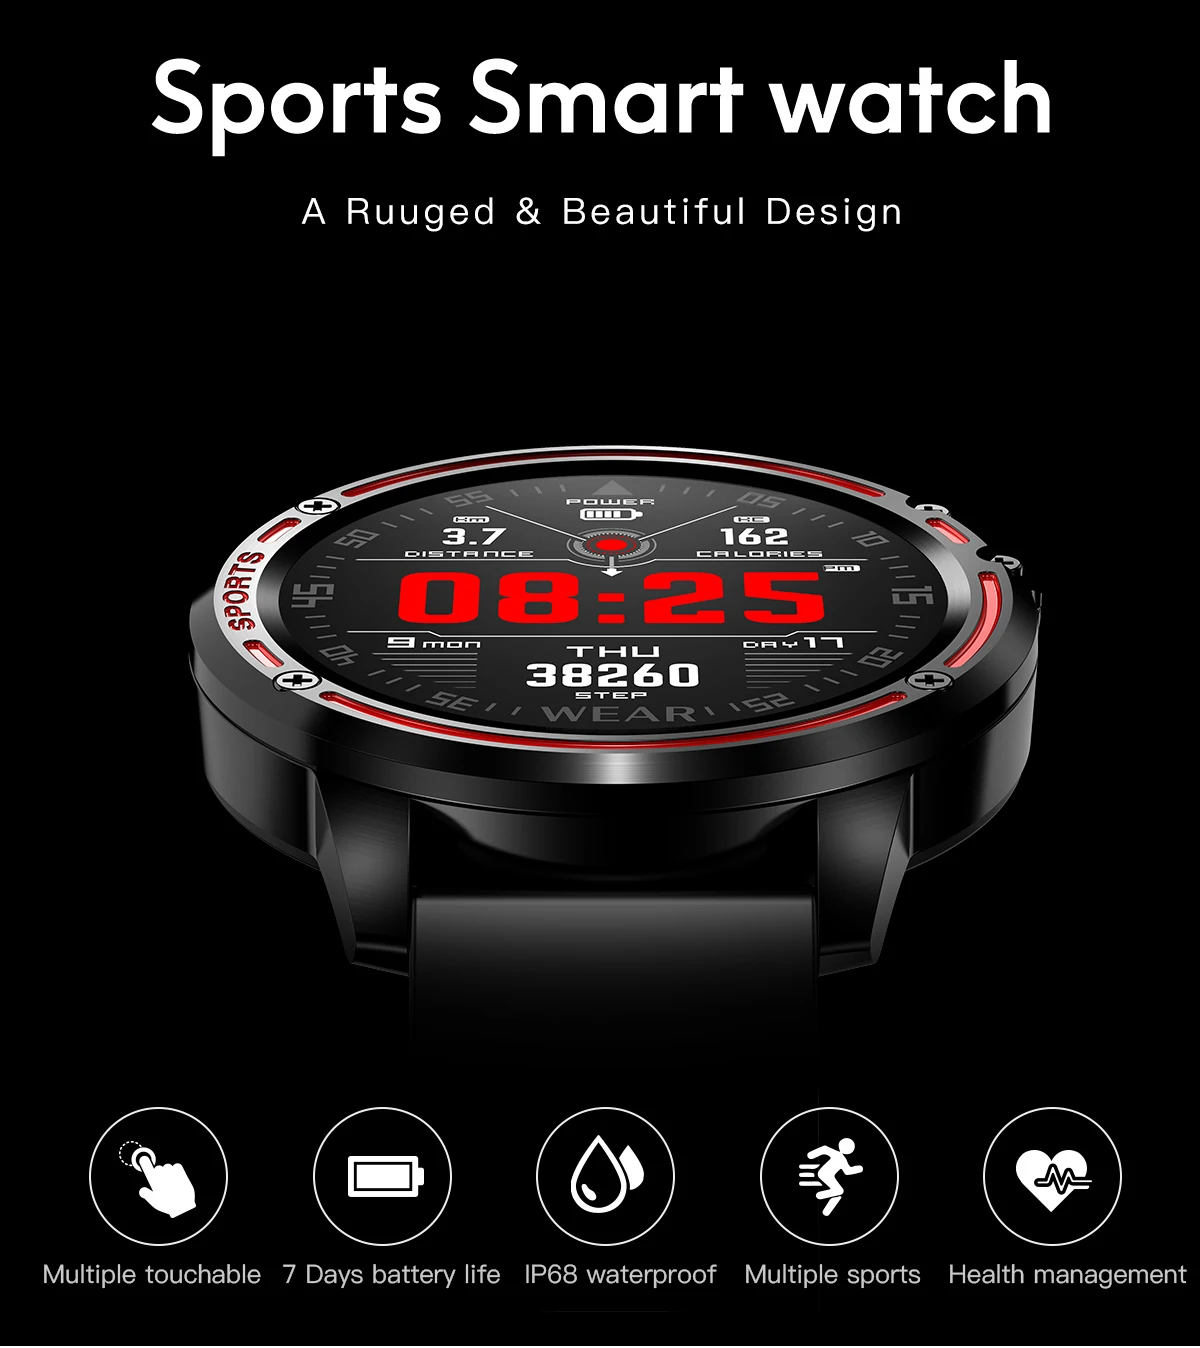 Torntisc L8 PPG+ ECG Full Round Display Smart Watch Men IP68 Waterproof Heart Rate Blood Pressure Sport Smartwatch